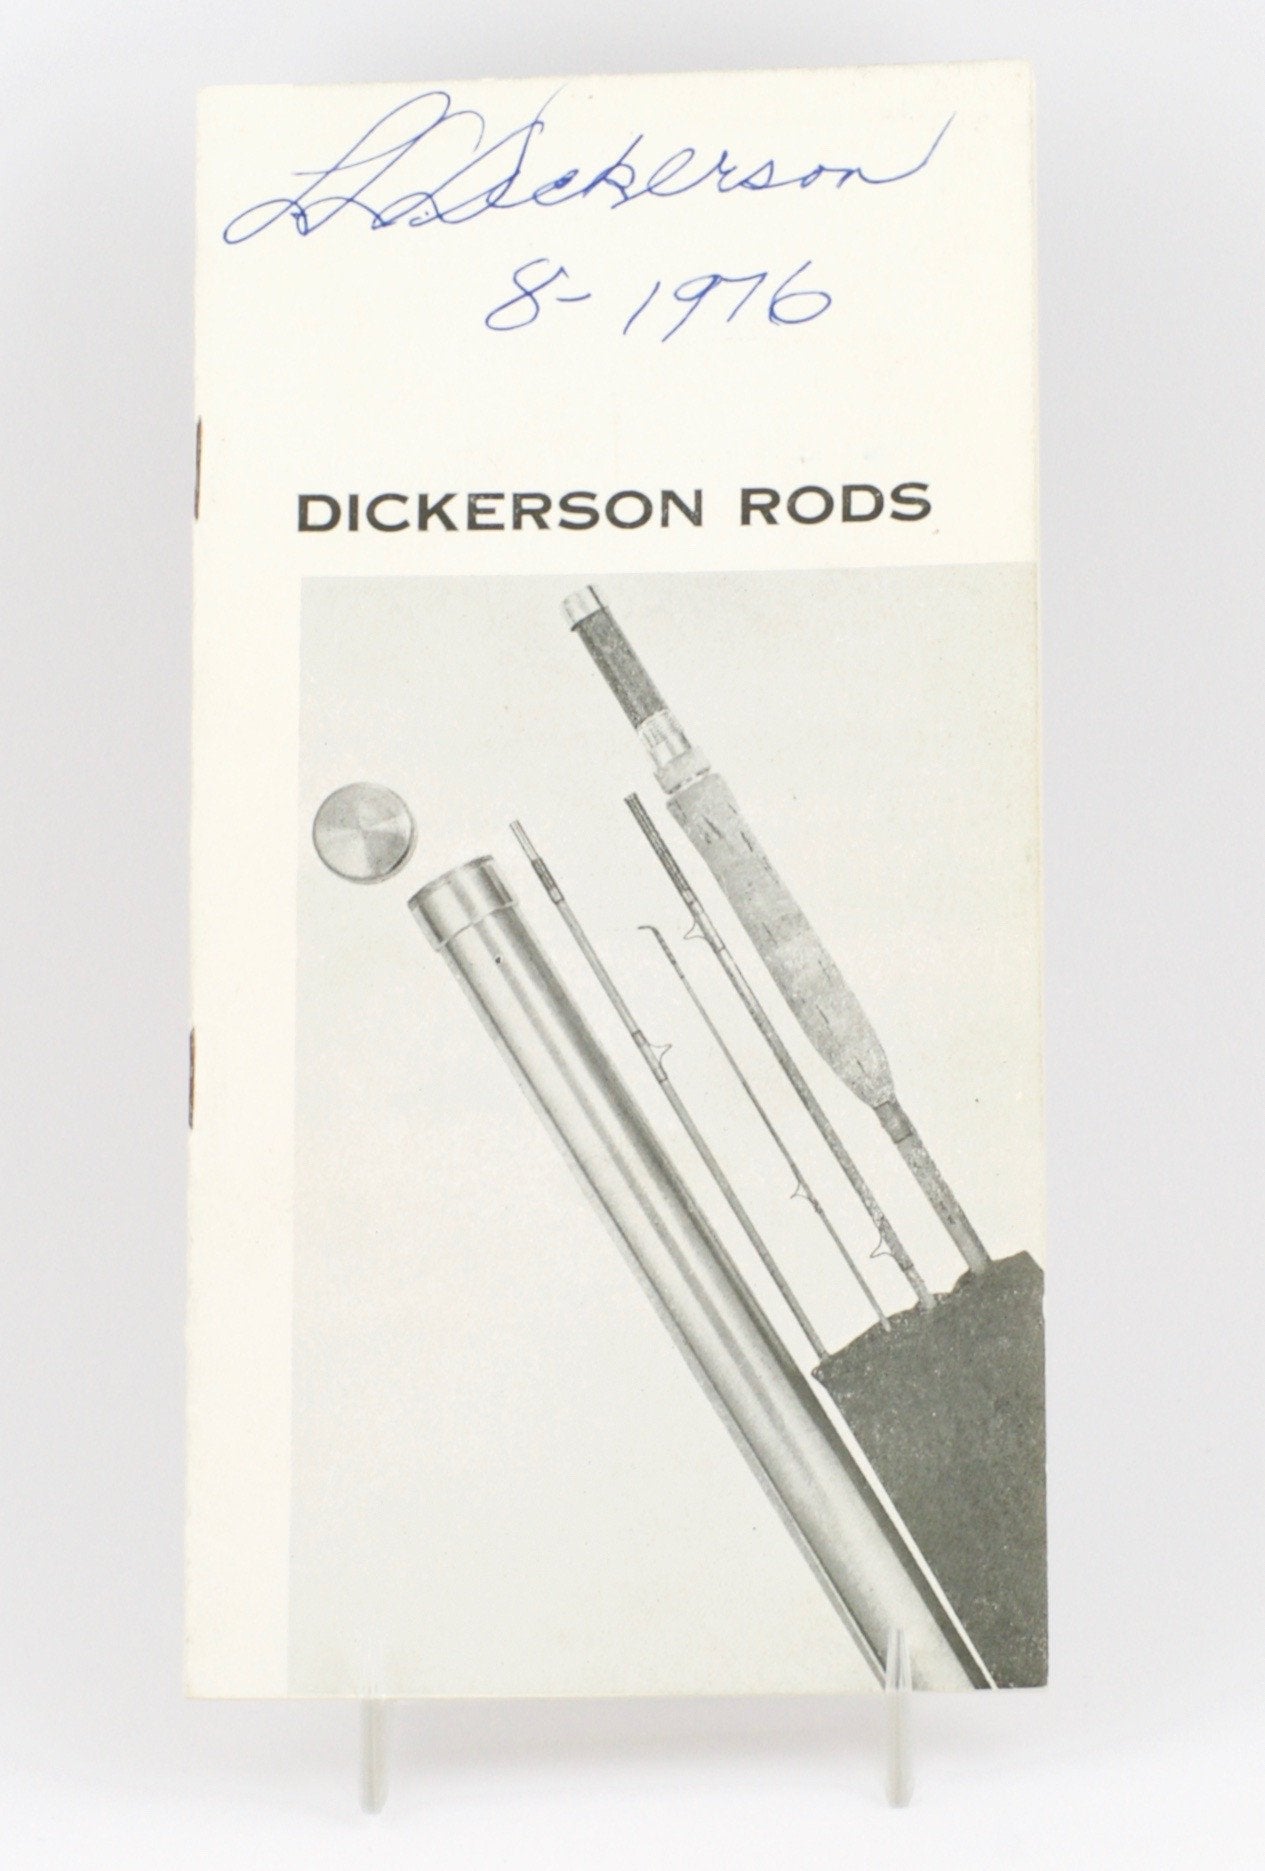 Dickerson Rod Catalog (signed!)